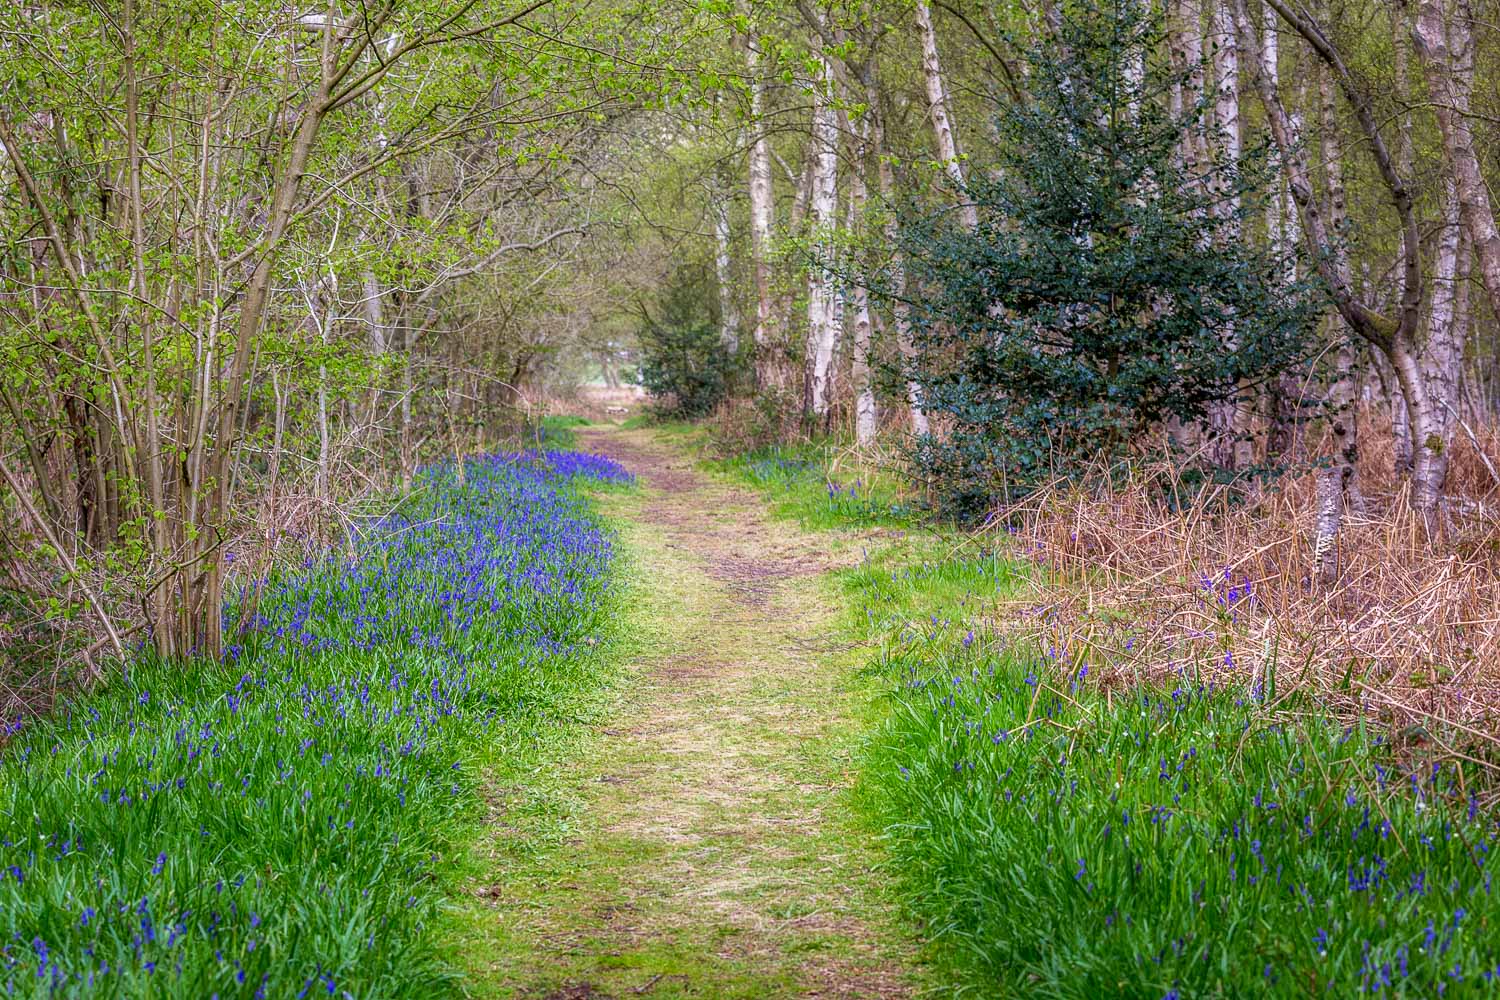 Northcliffe Wood, bluebells